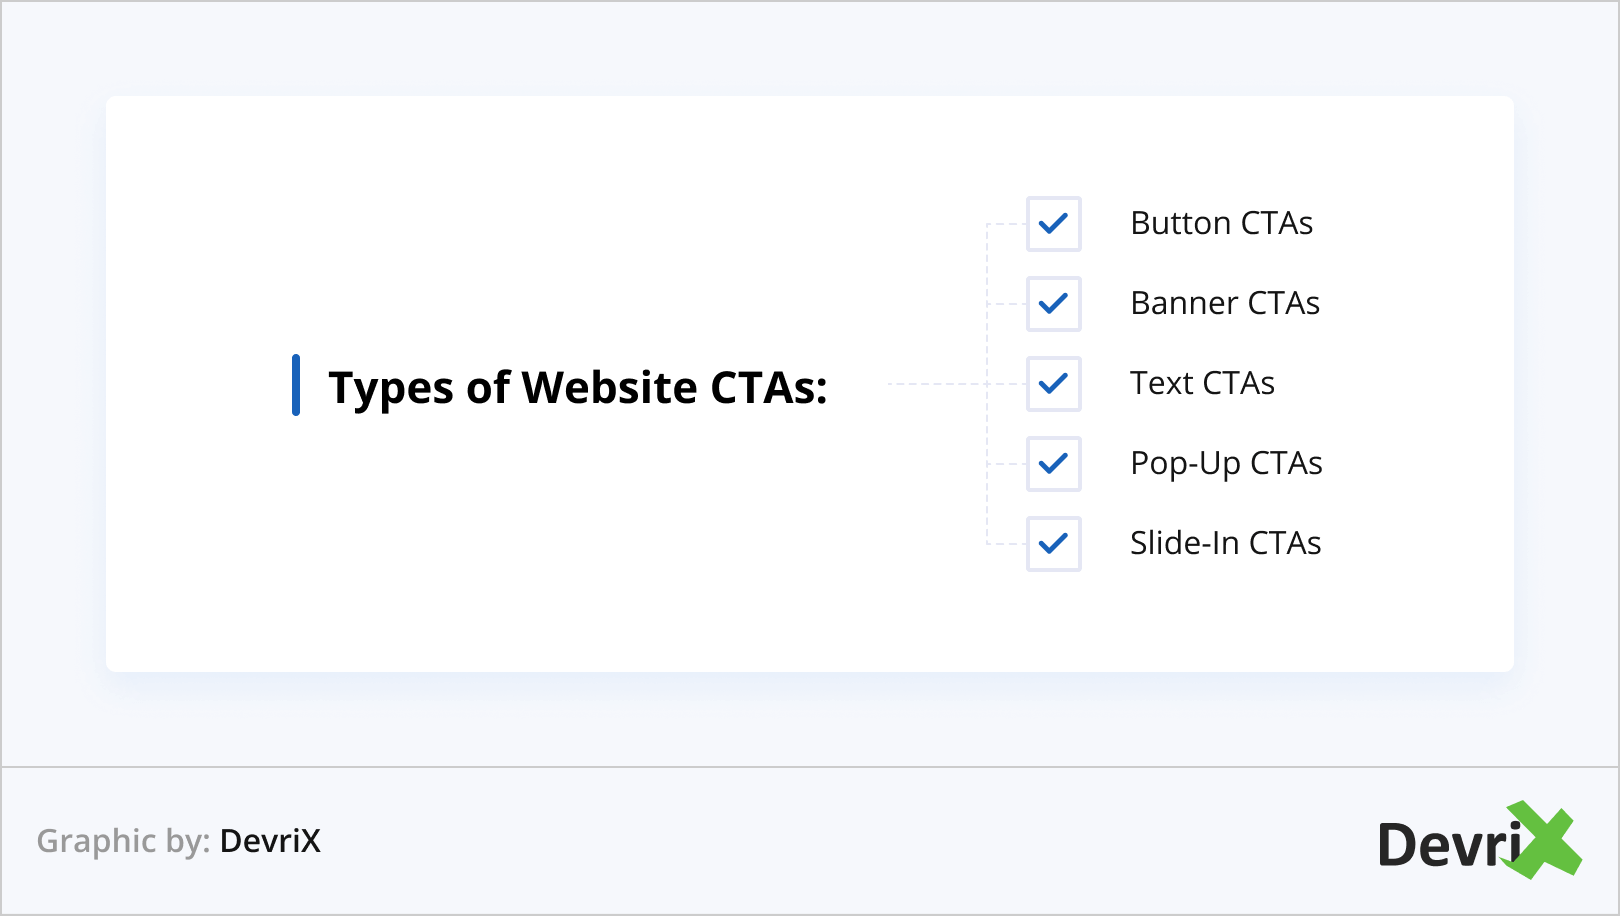 Types of Website CTAs